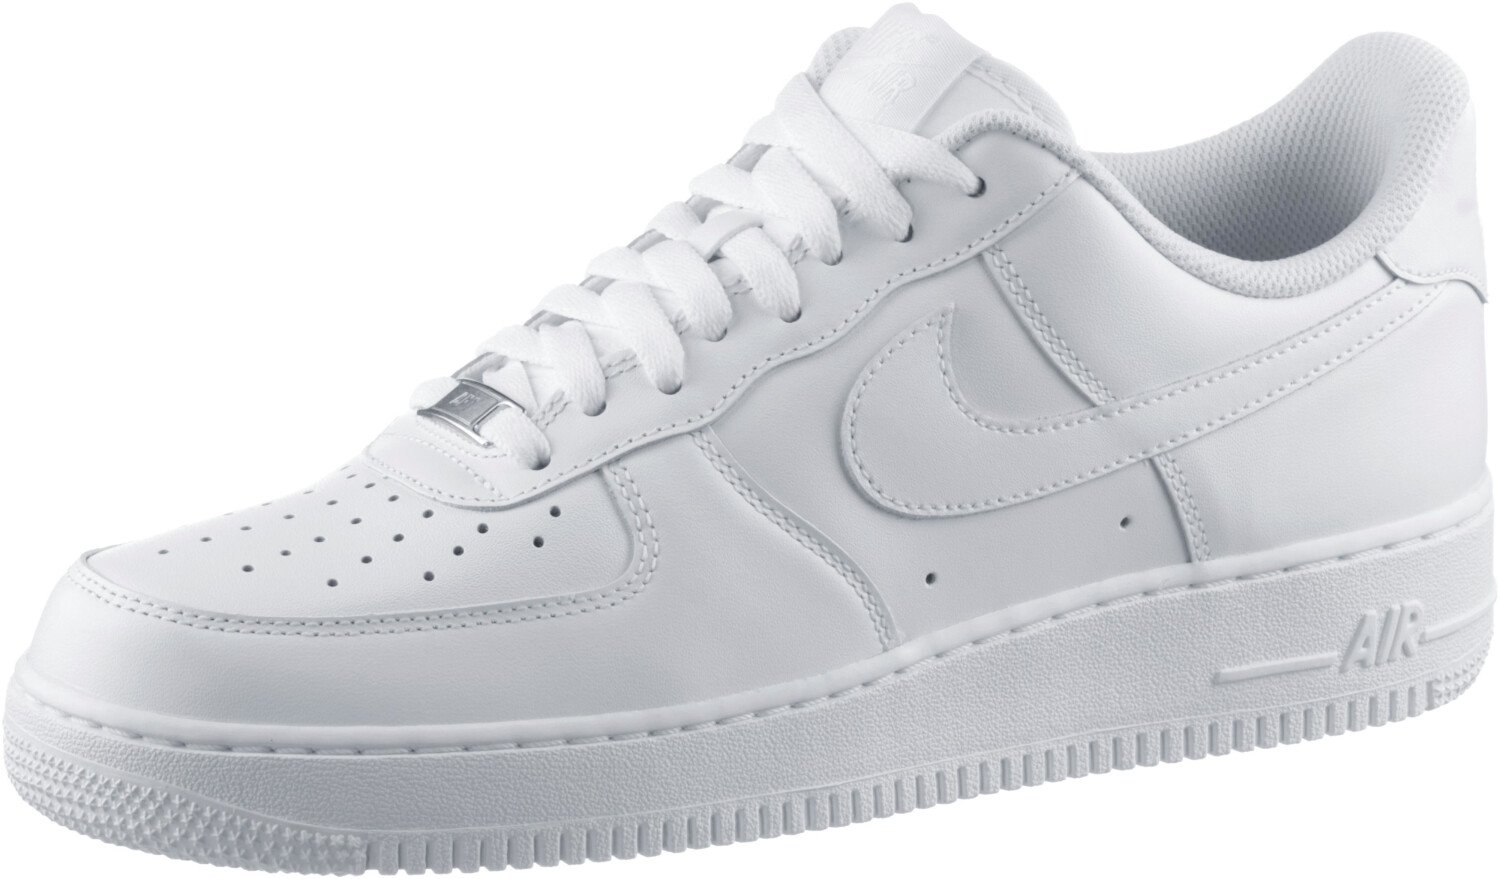 Nike Air Force 1 '07 all white